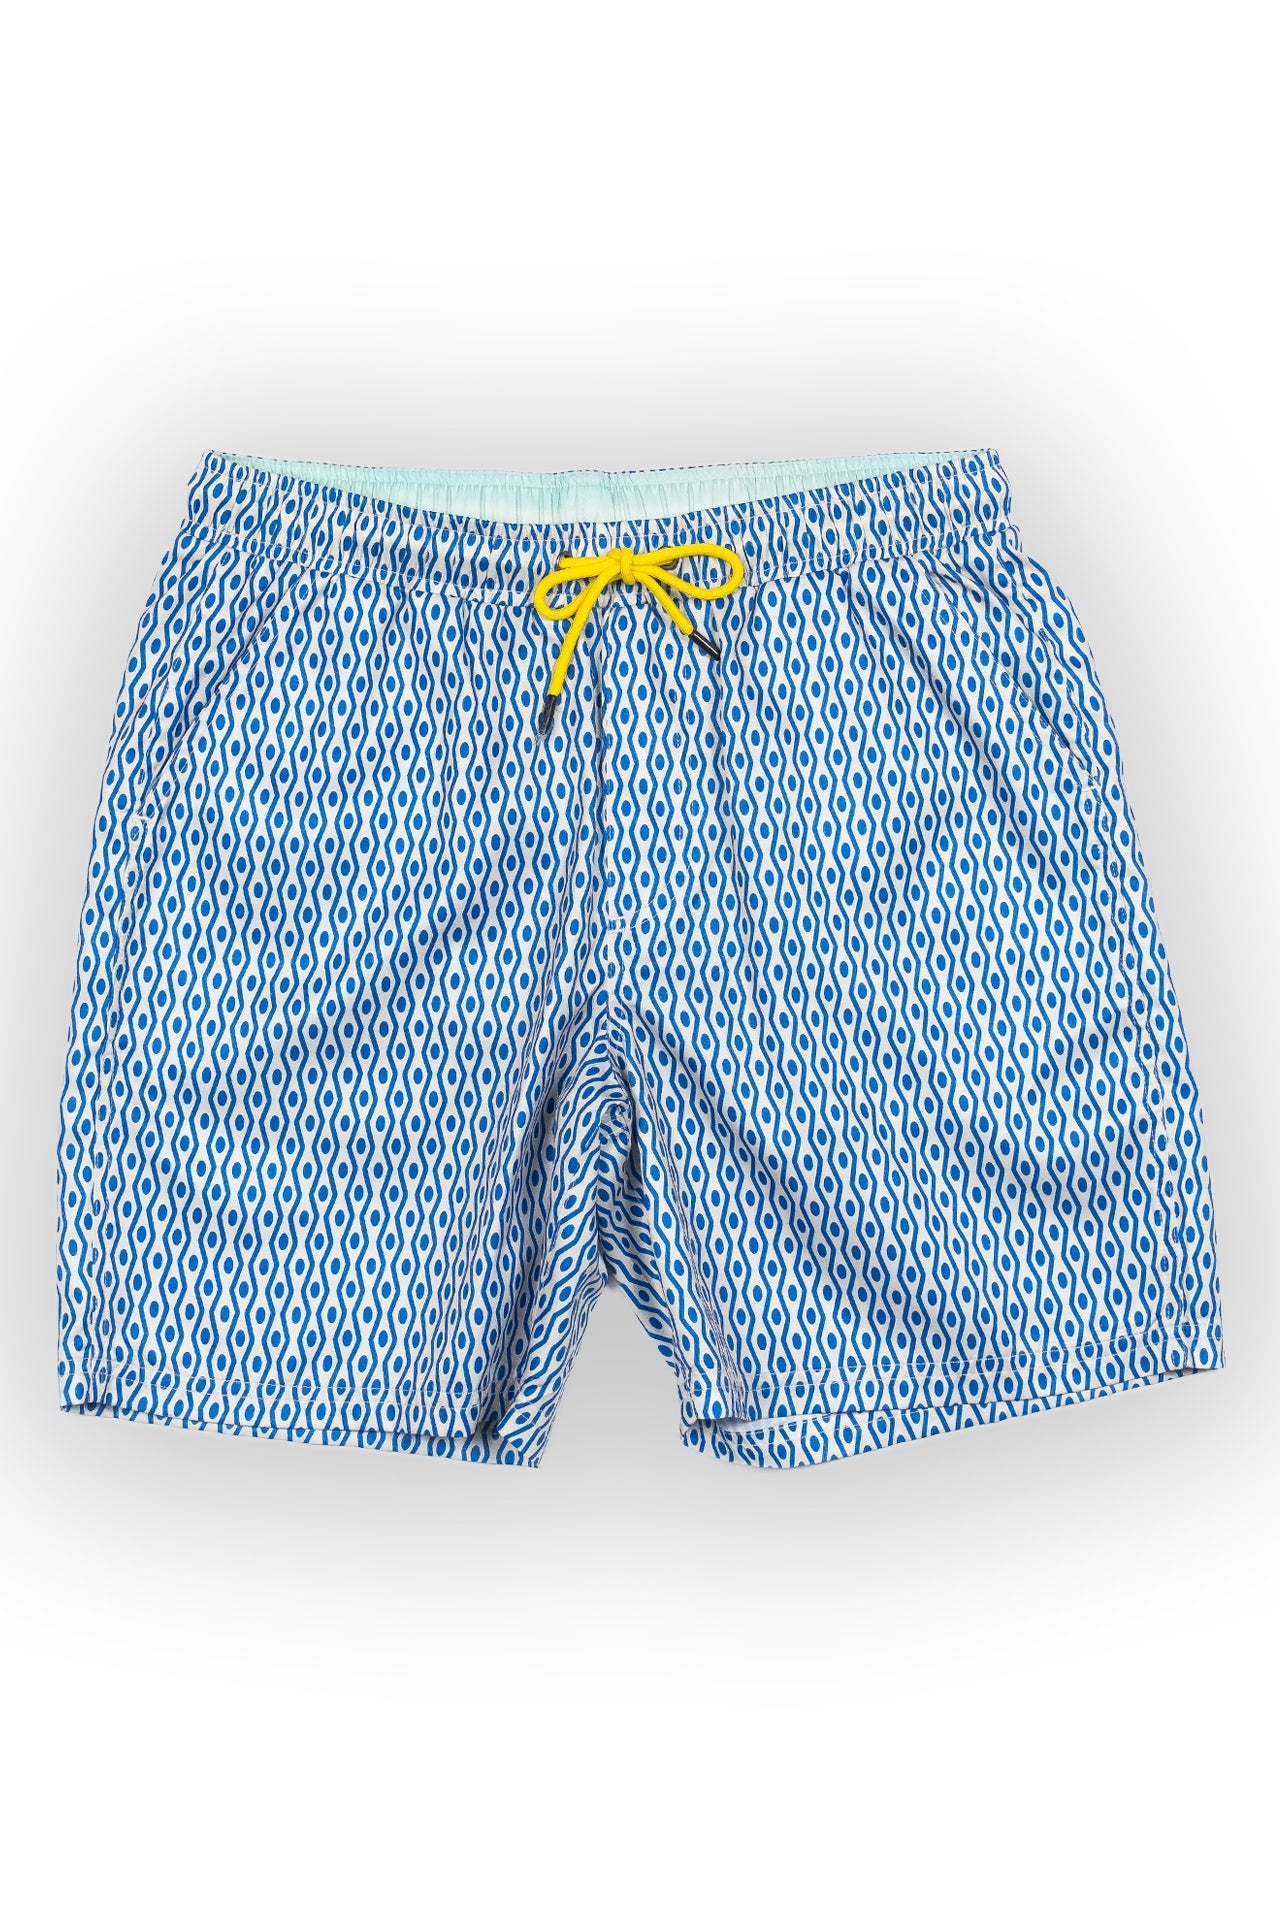 Arlo Geo Print Swim Shorts - Rupert and Buckley - Swin Shorts